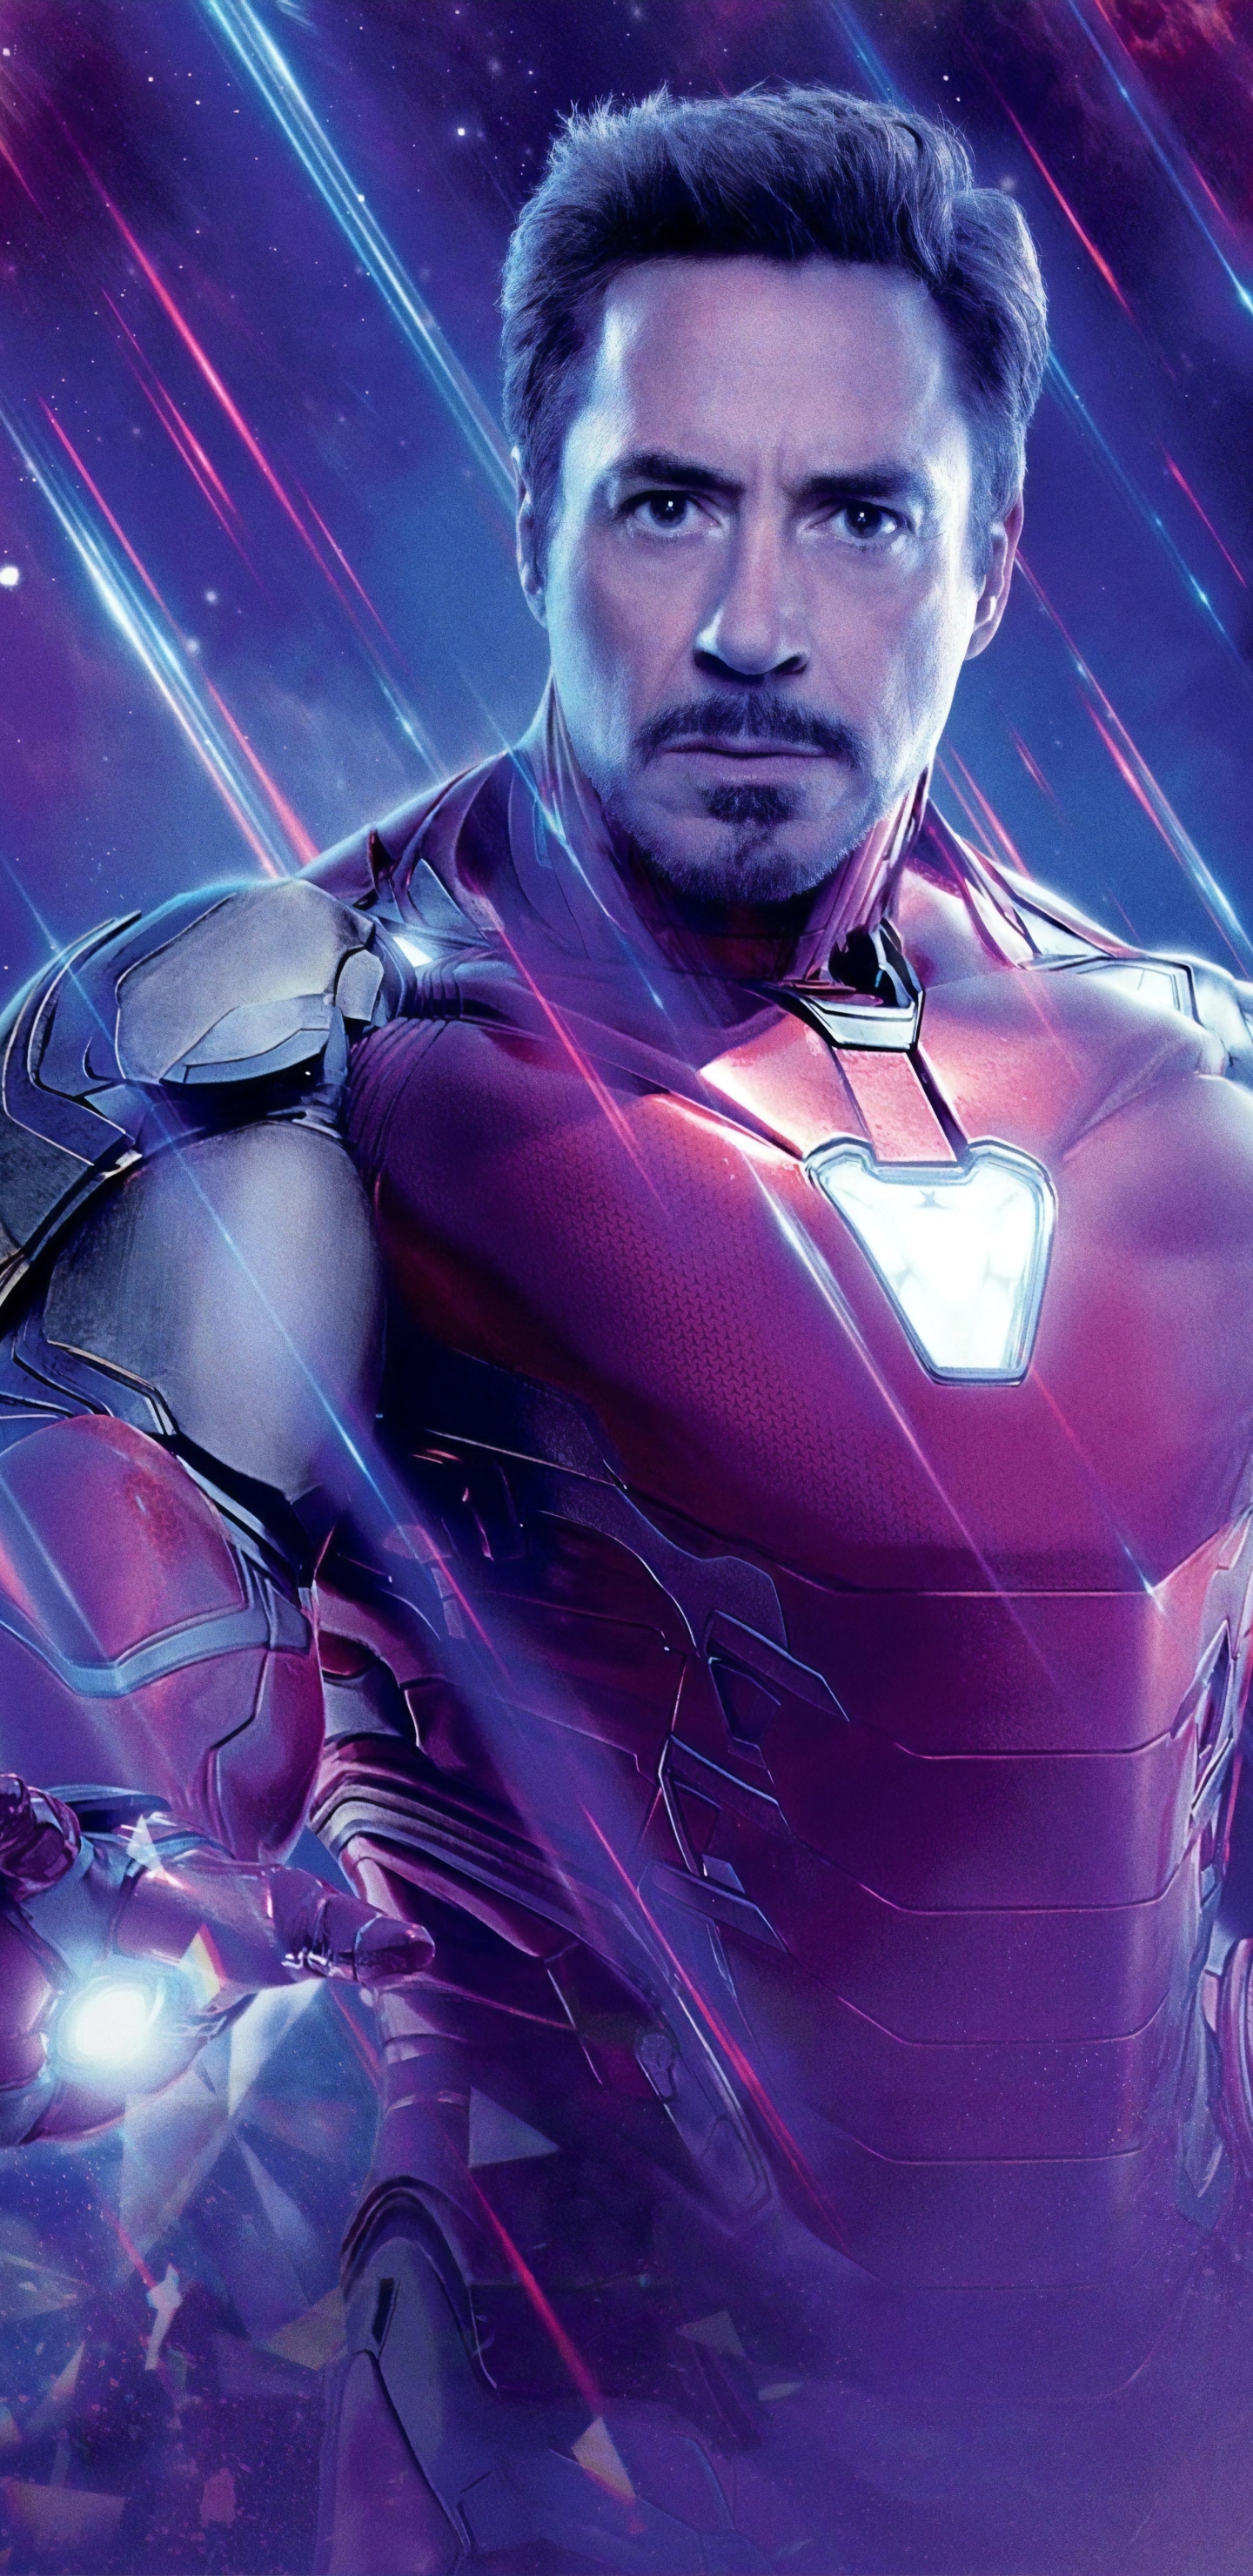 1440x2960 Iron Man In Avengers Endgame Samsung Galaxy Note 9